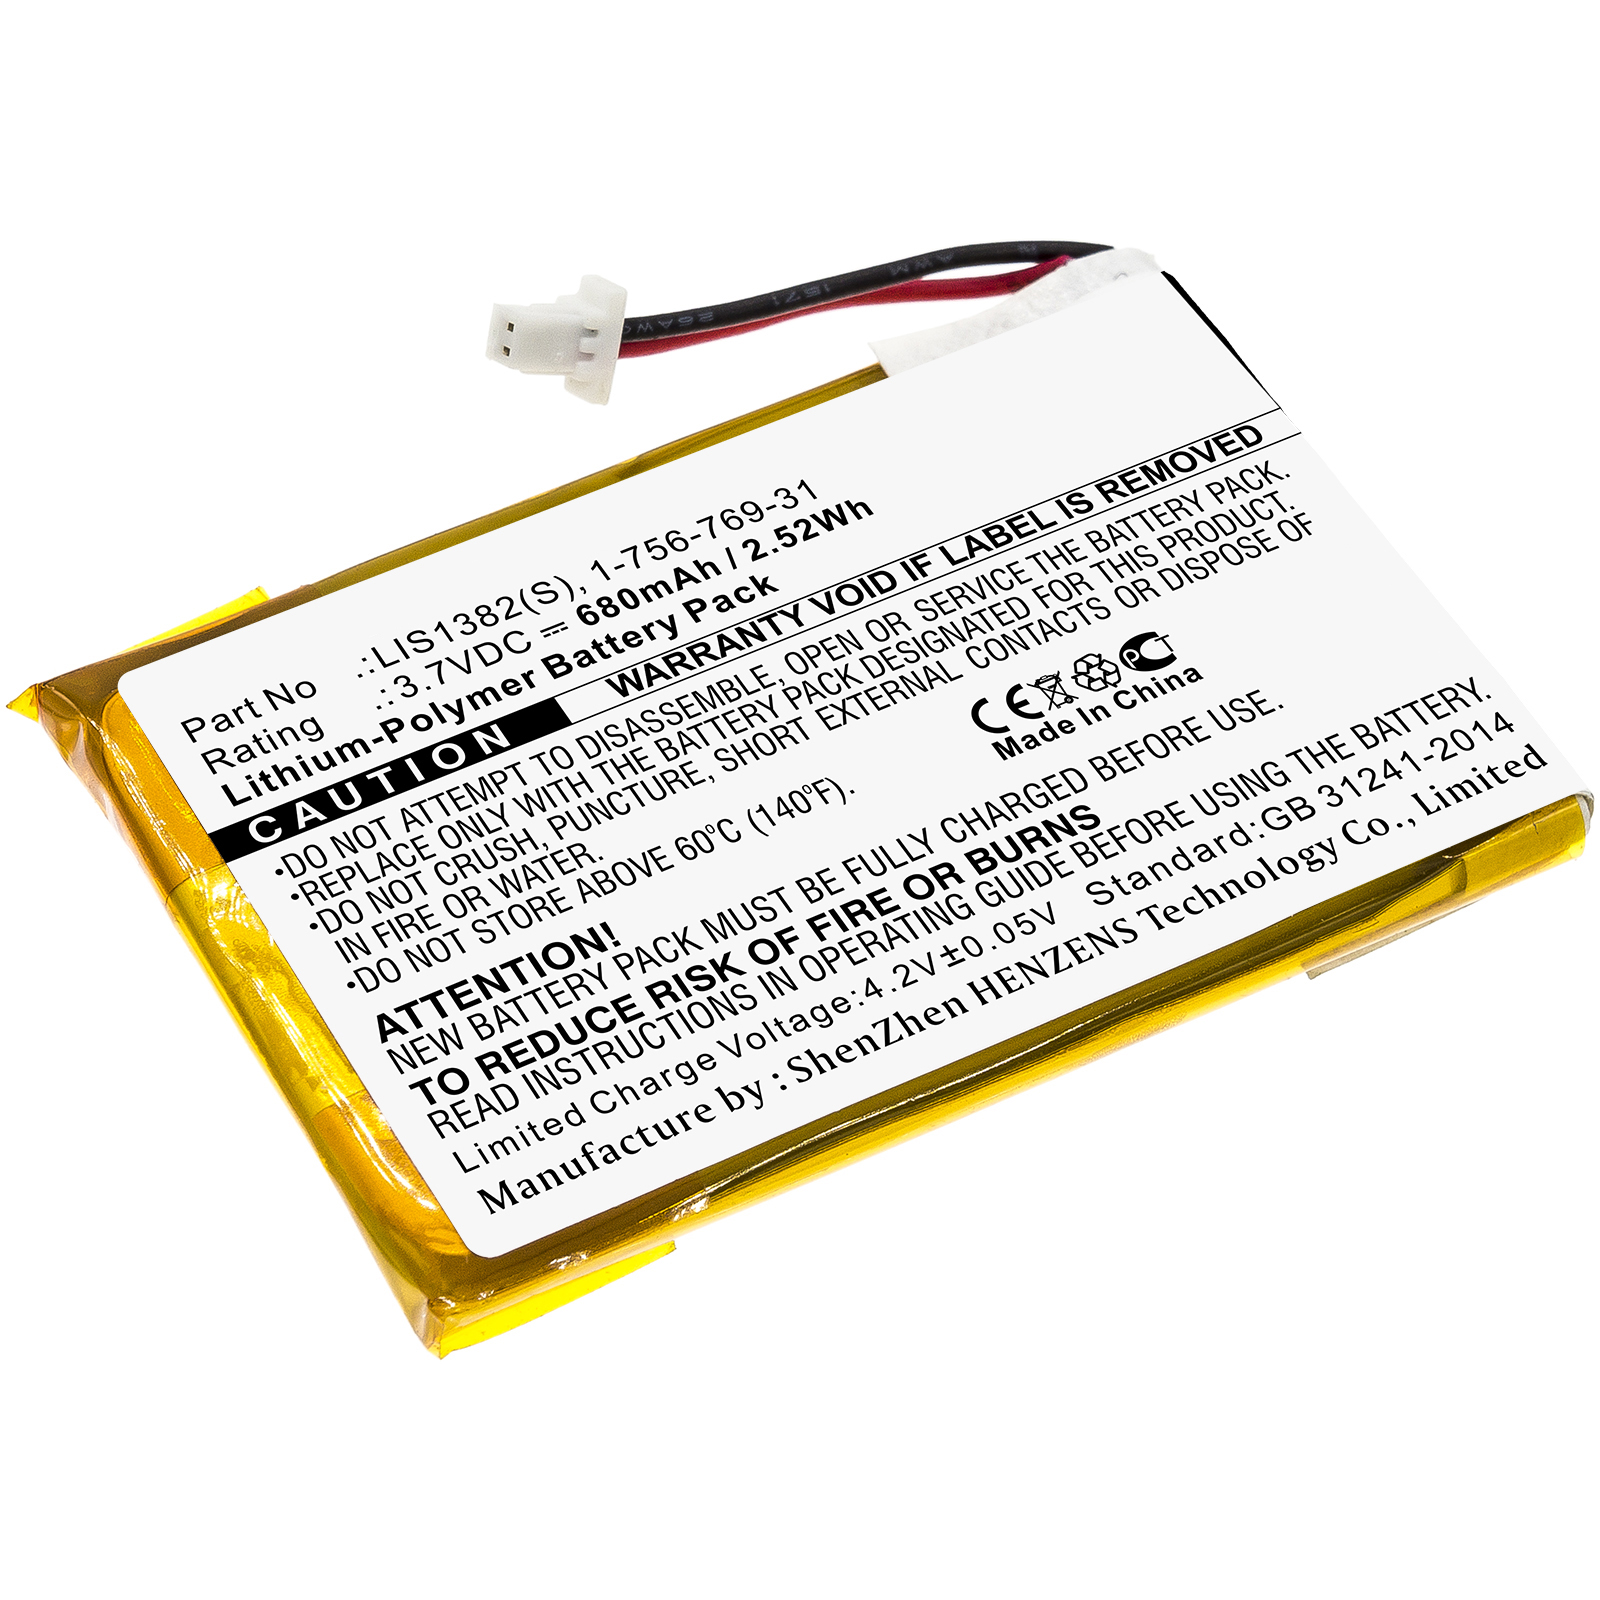 Synergy Digital Tablet Battery, Compatible With Sony 1-756-769-31 Tablet Battery - (Li-Pol, 3.7V, 680 mAh)